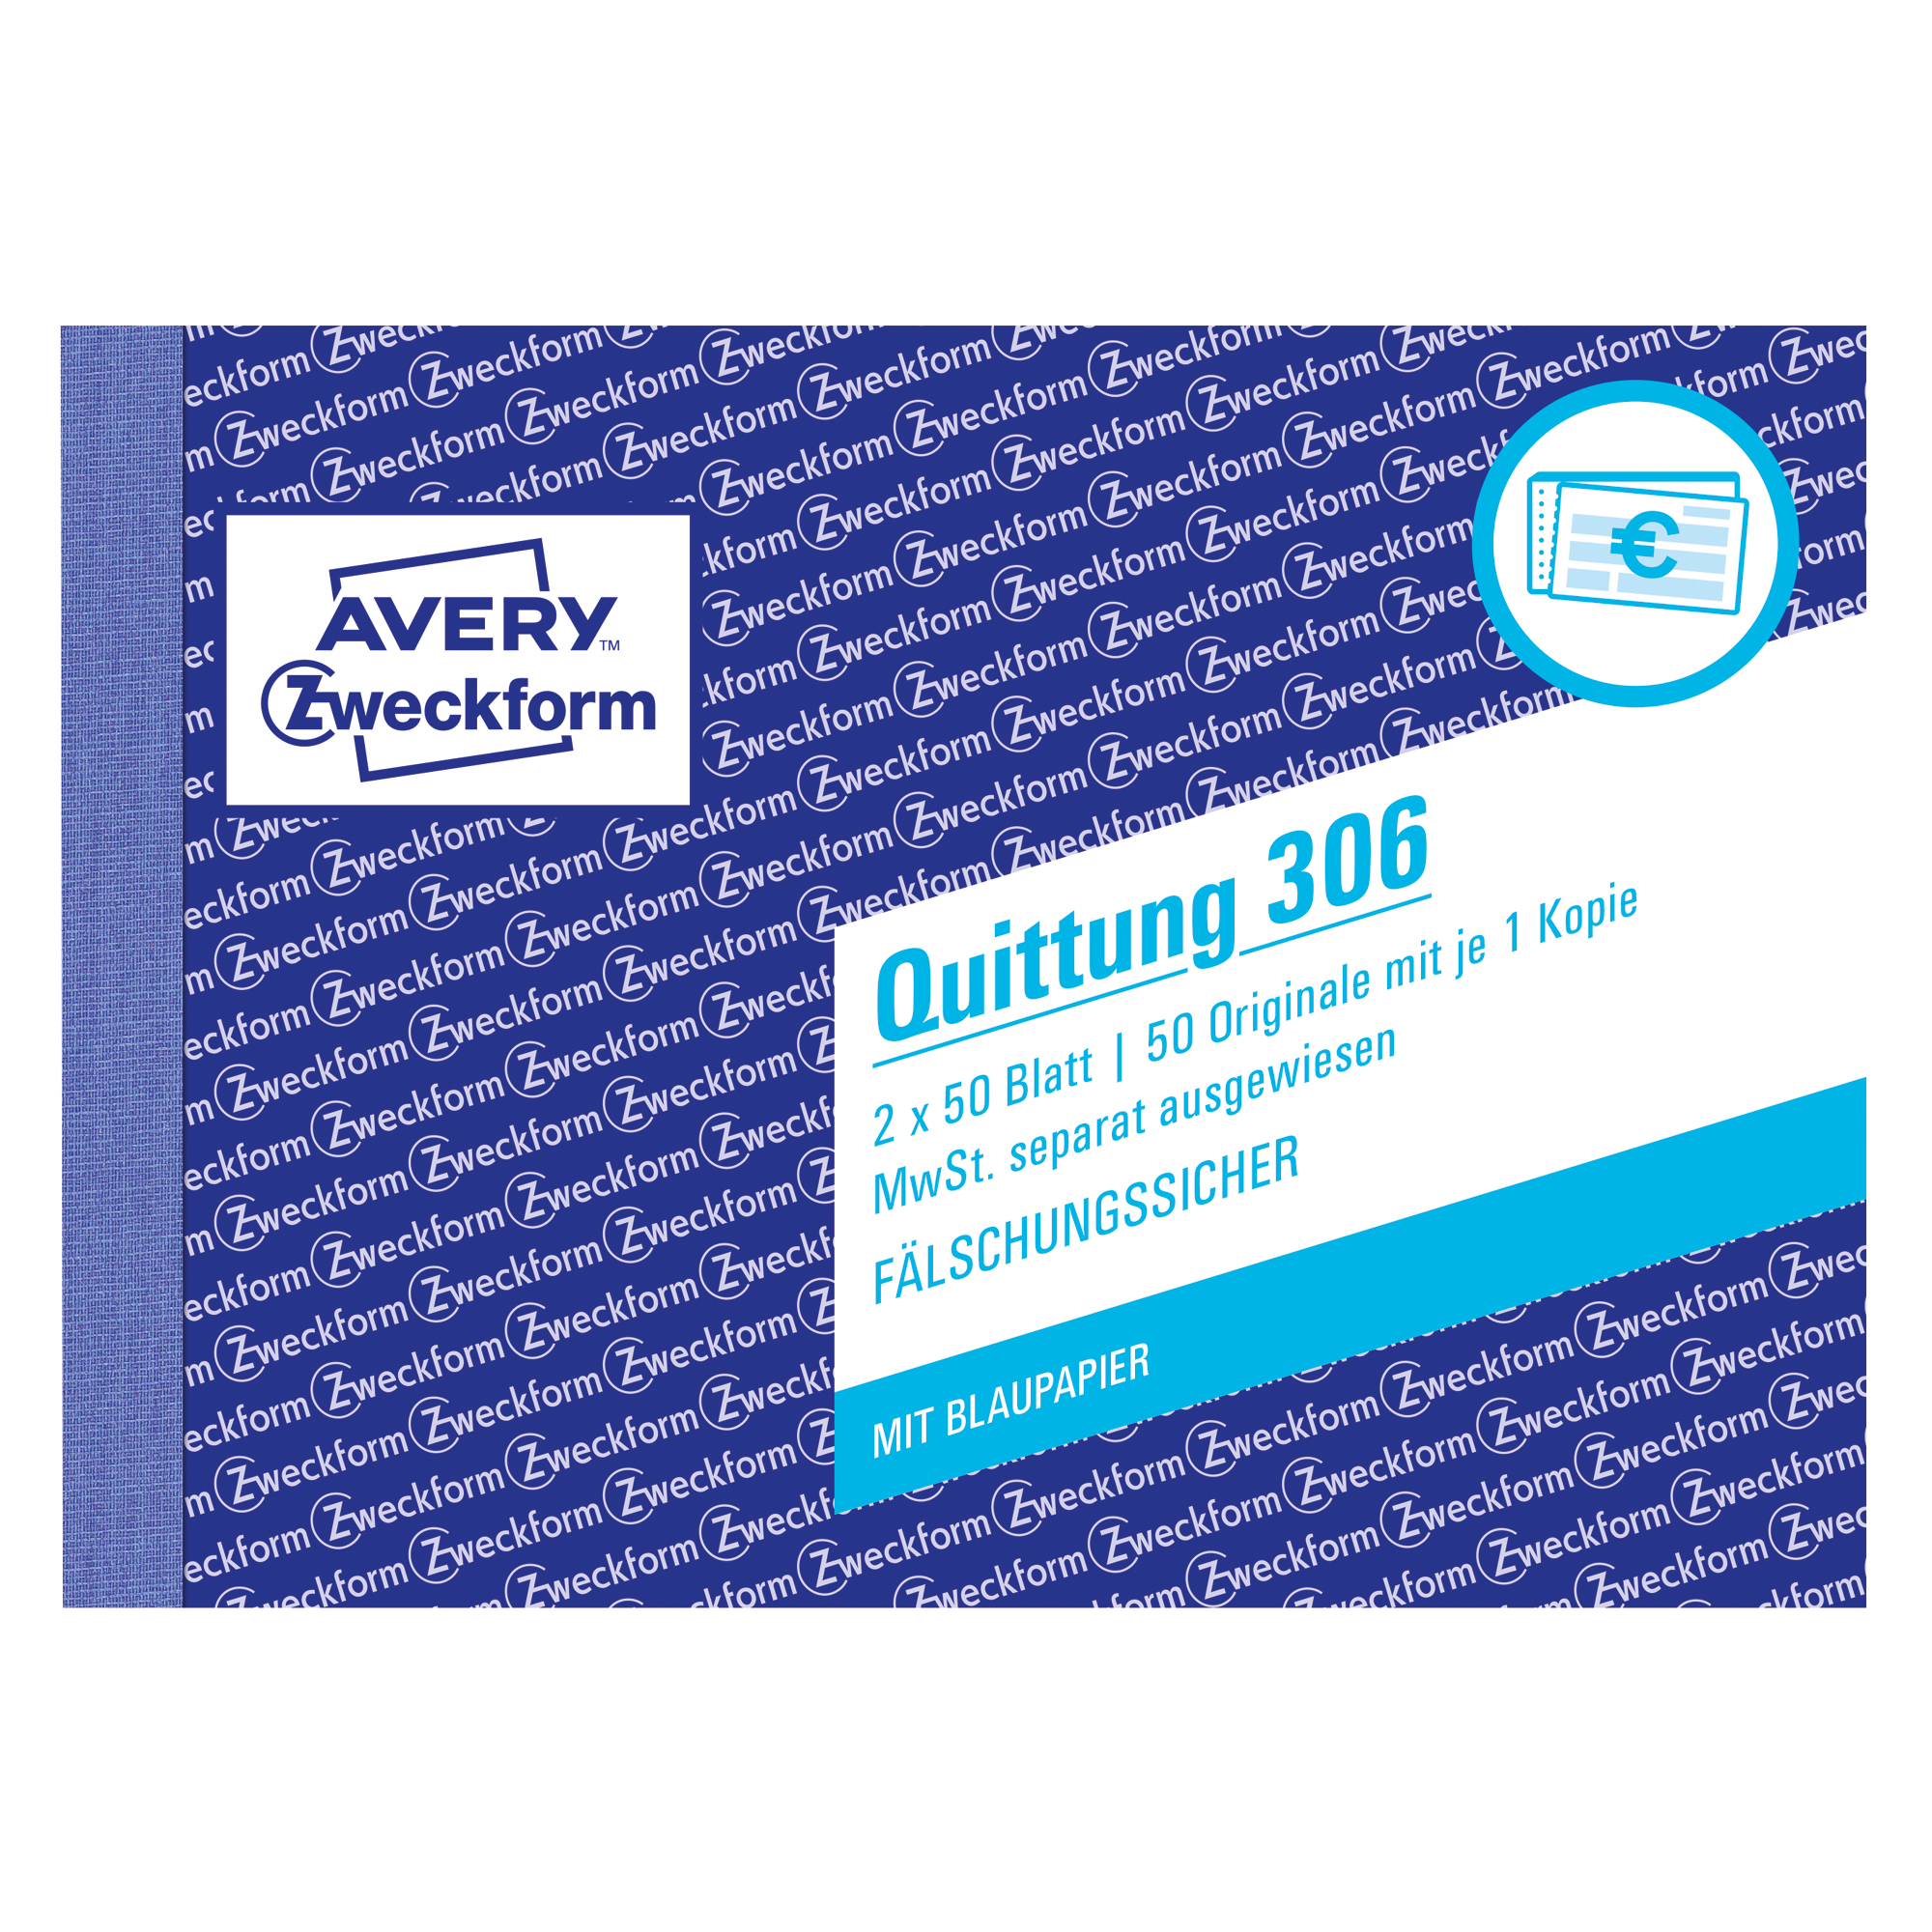 Avery Zweckform Quittung 306